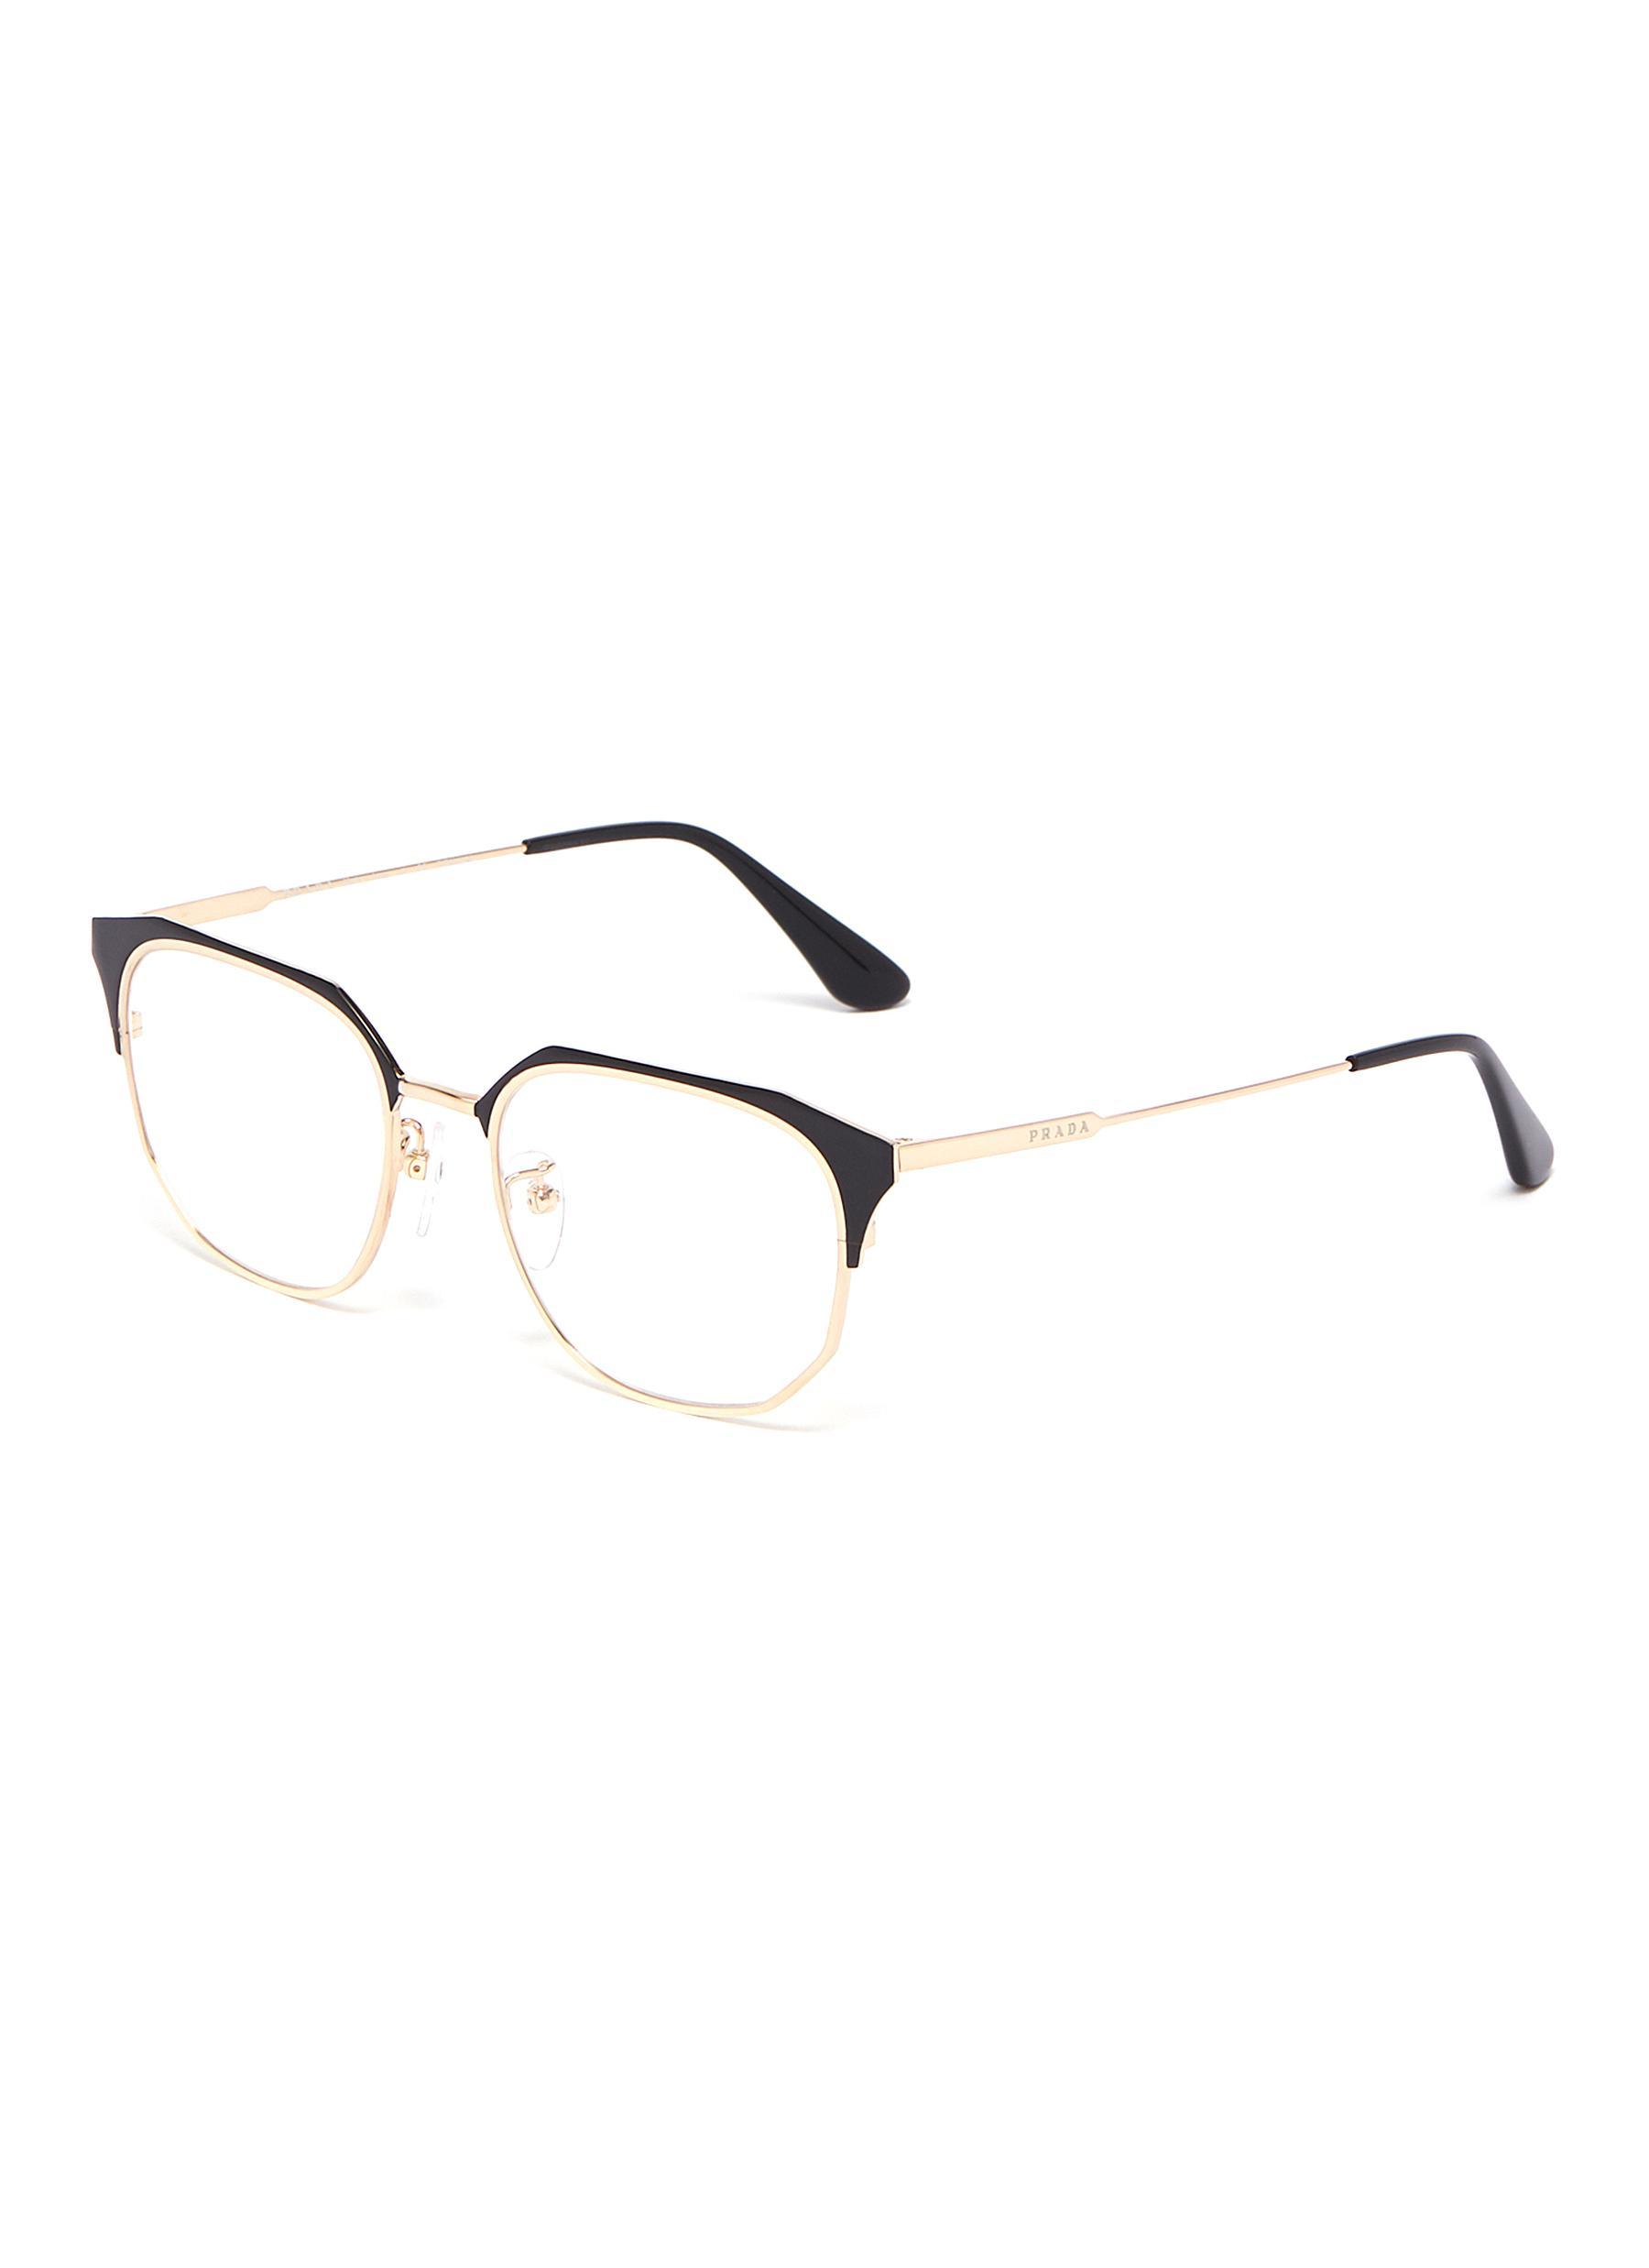 Prada Browline Glasses Clearance, 52% OFF | powerofdance.com